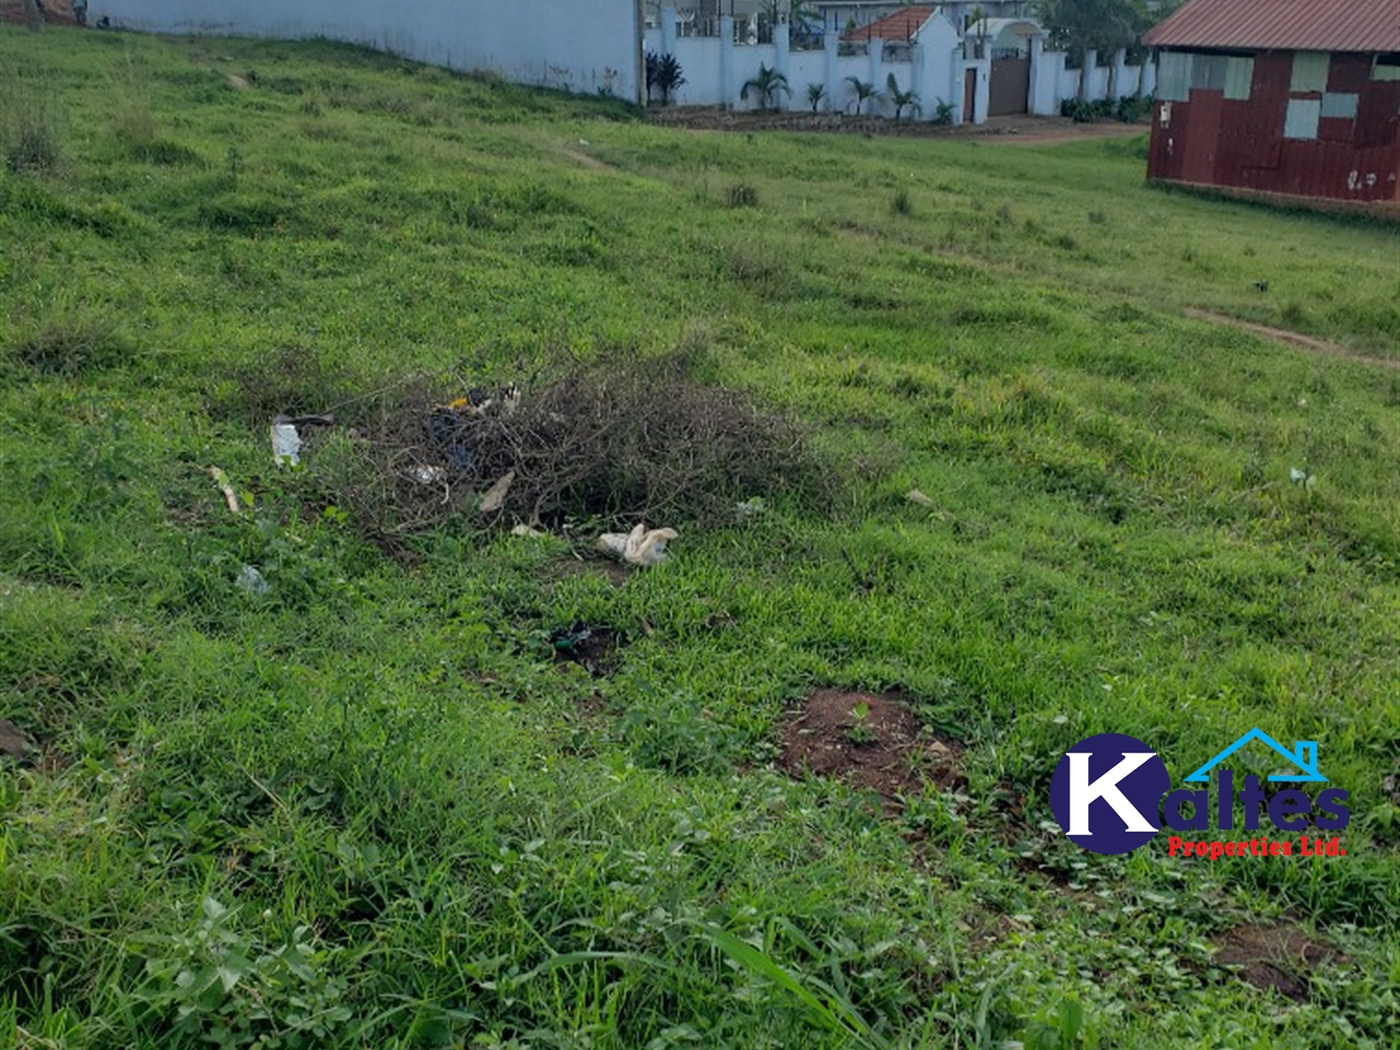 Residential Land for sale in Nateete Mukono